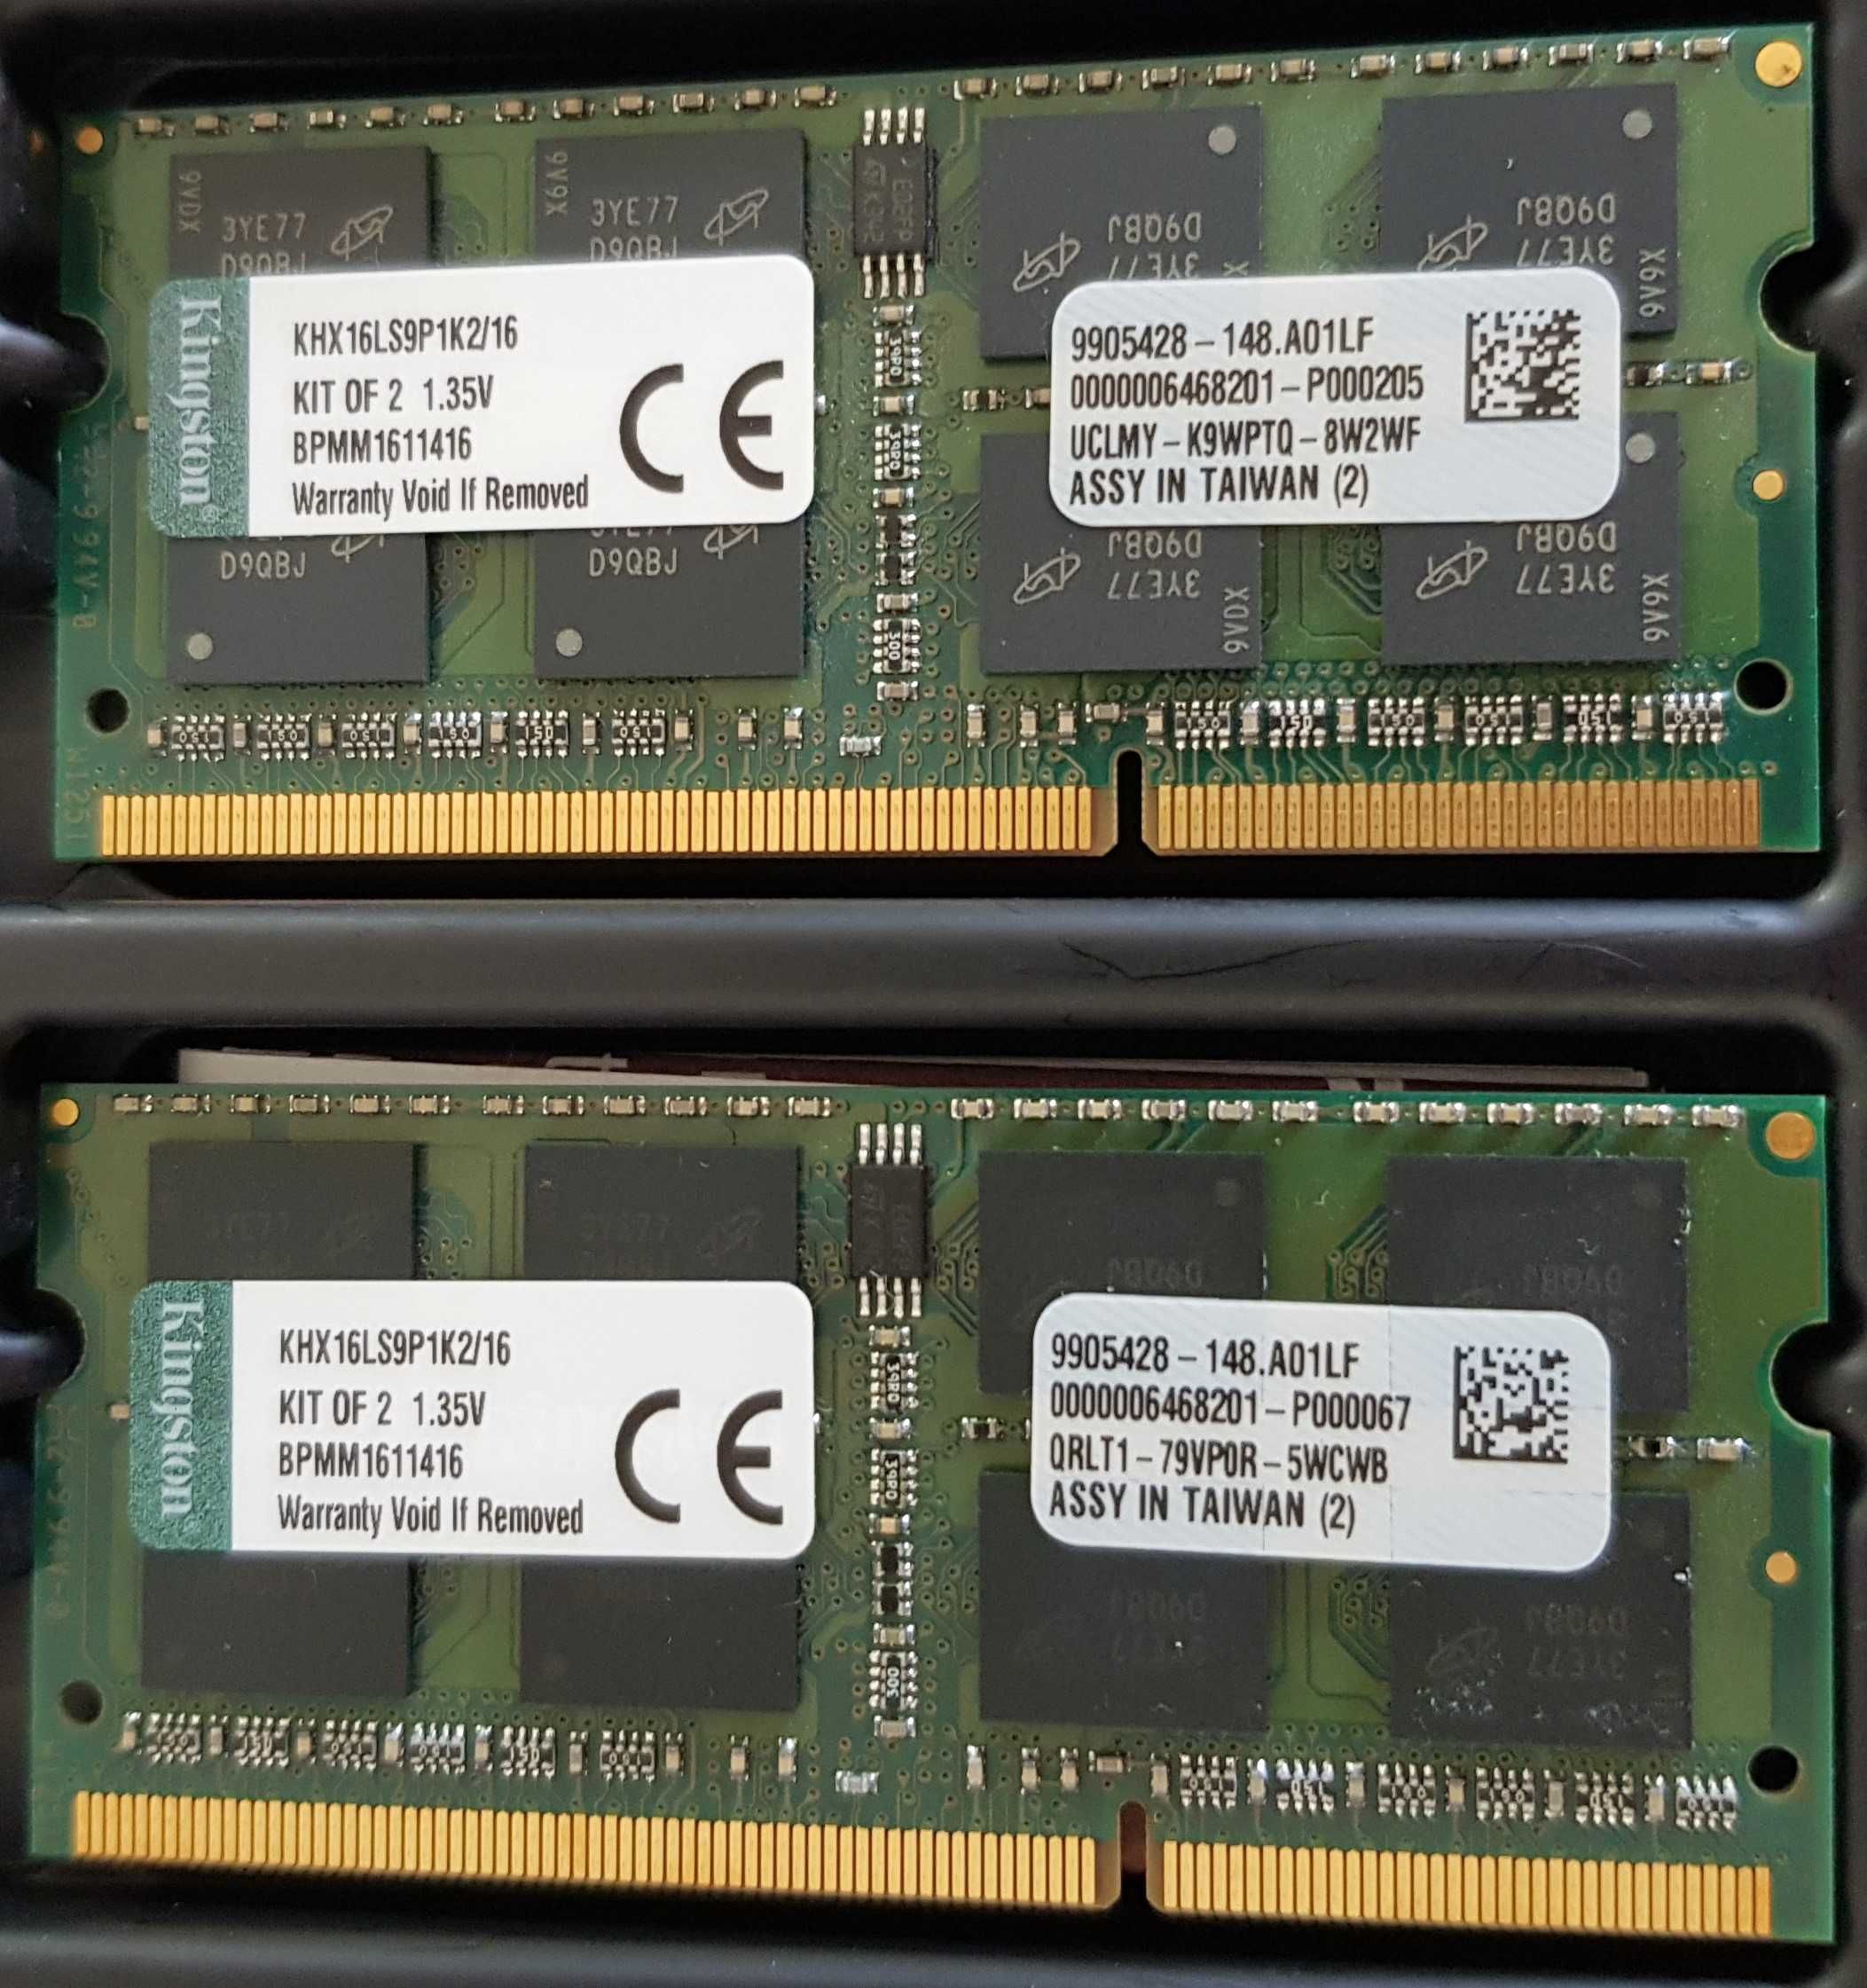 Kit 16GB (2 x 8GB) DDR3L SODIMM 1600MHz CL9 1.35V Kingston HyperX PnP